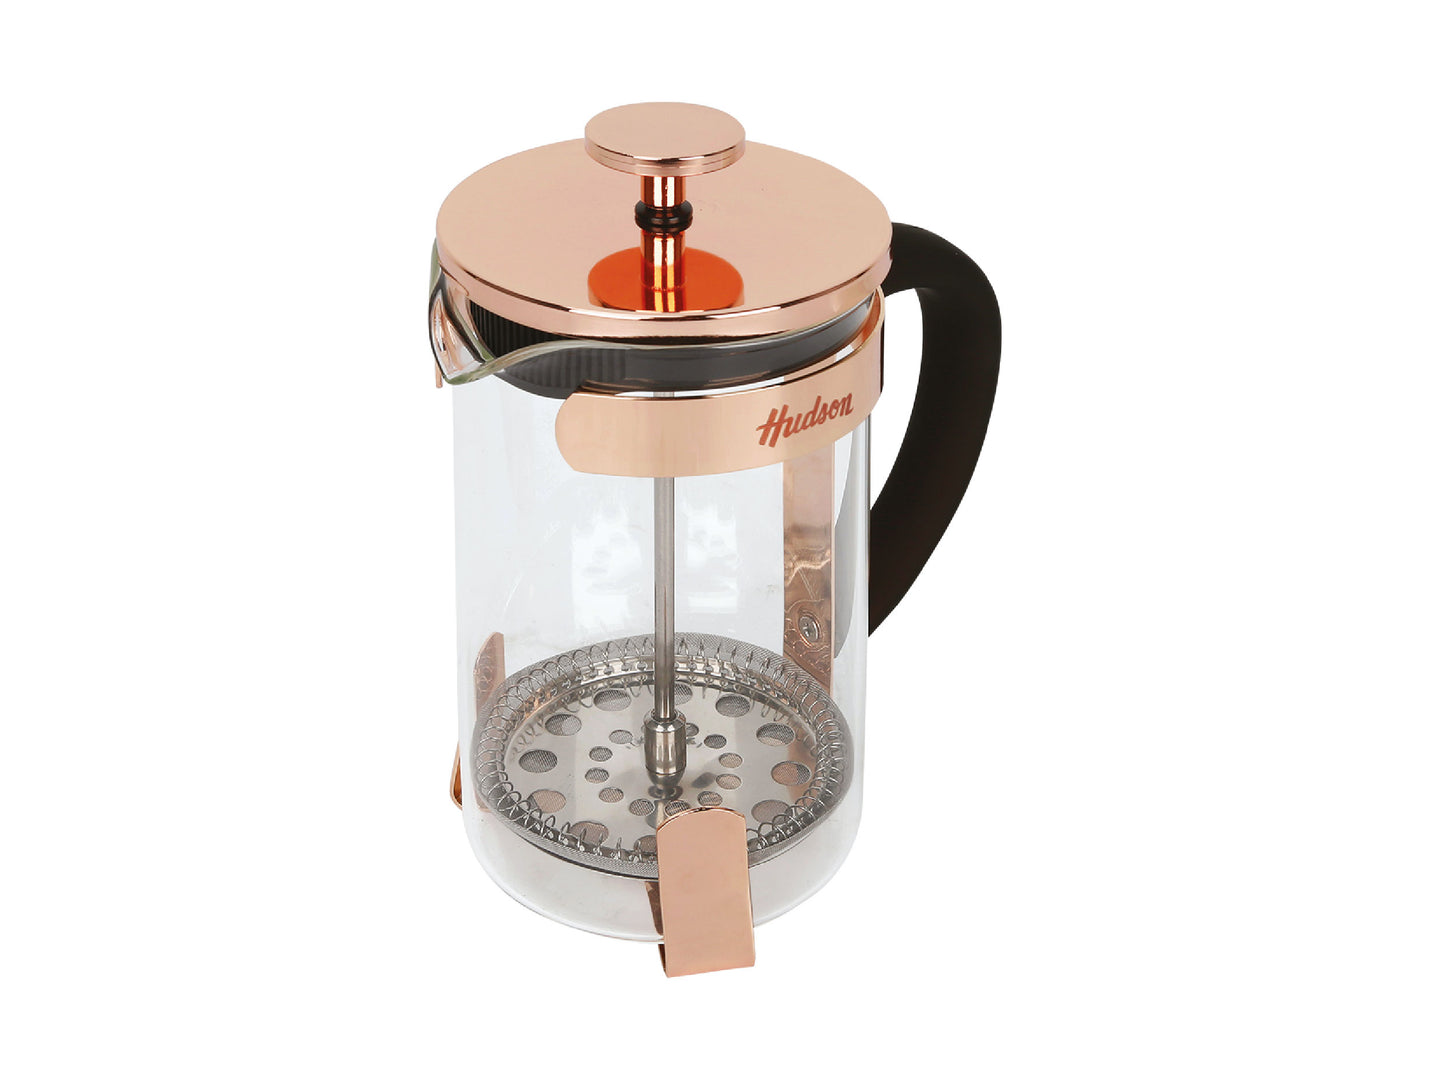 HUDSON French Press Coffee and Tea Maker, 0.6Qt, Copper